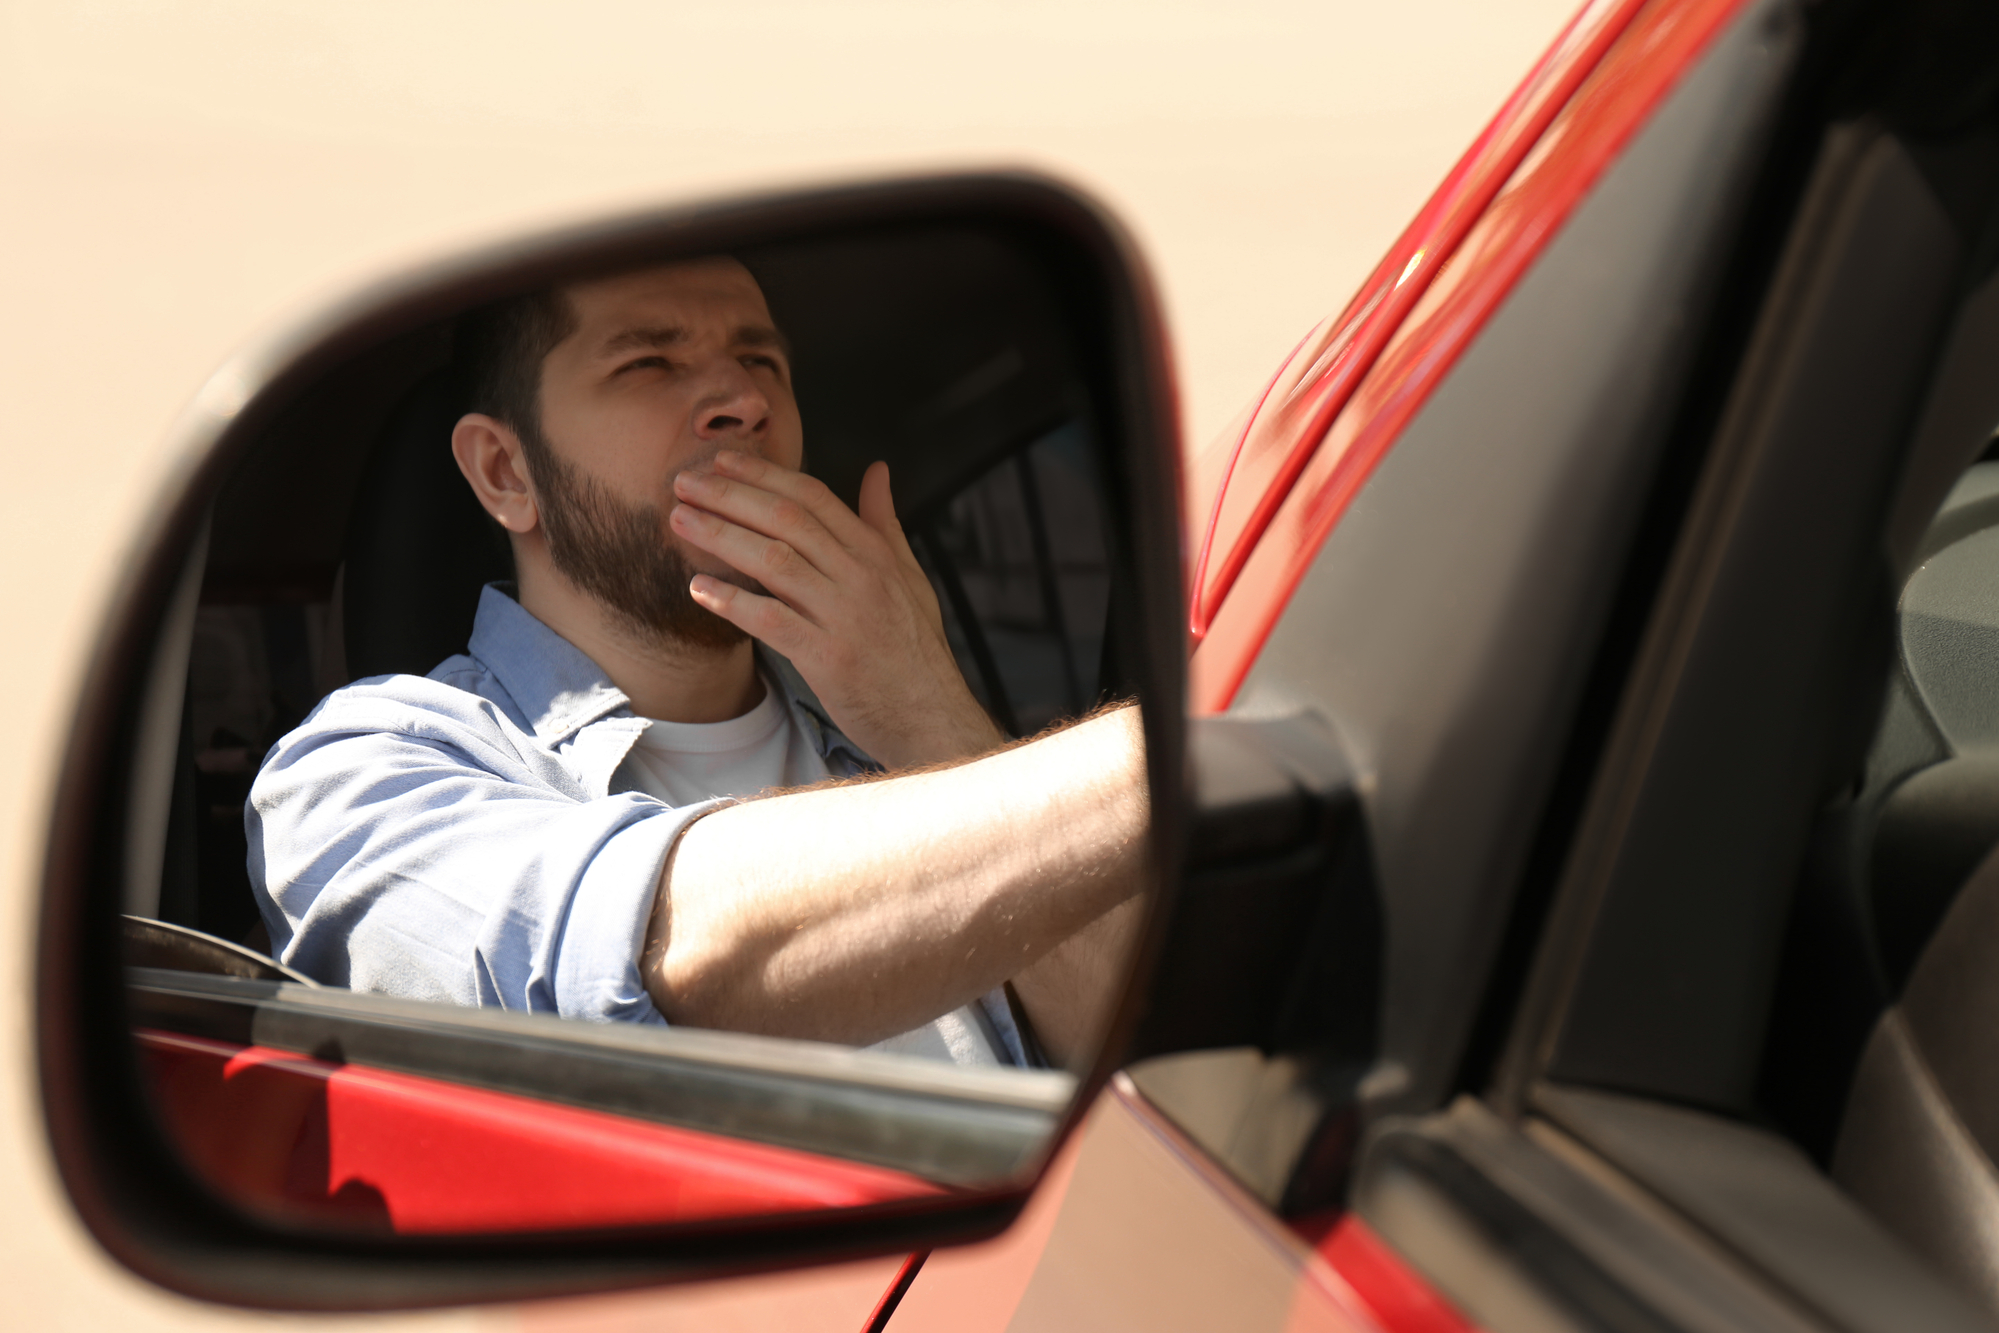 driver yawning in mirror